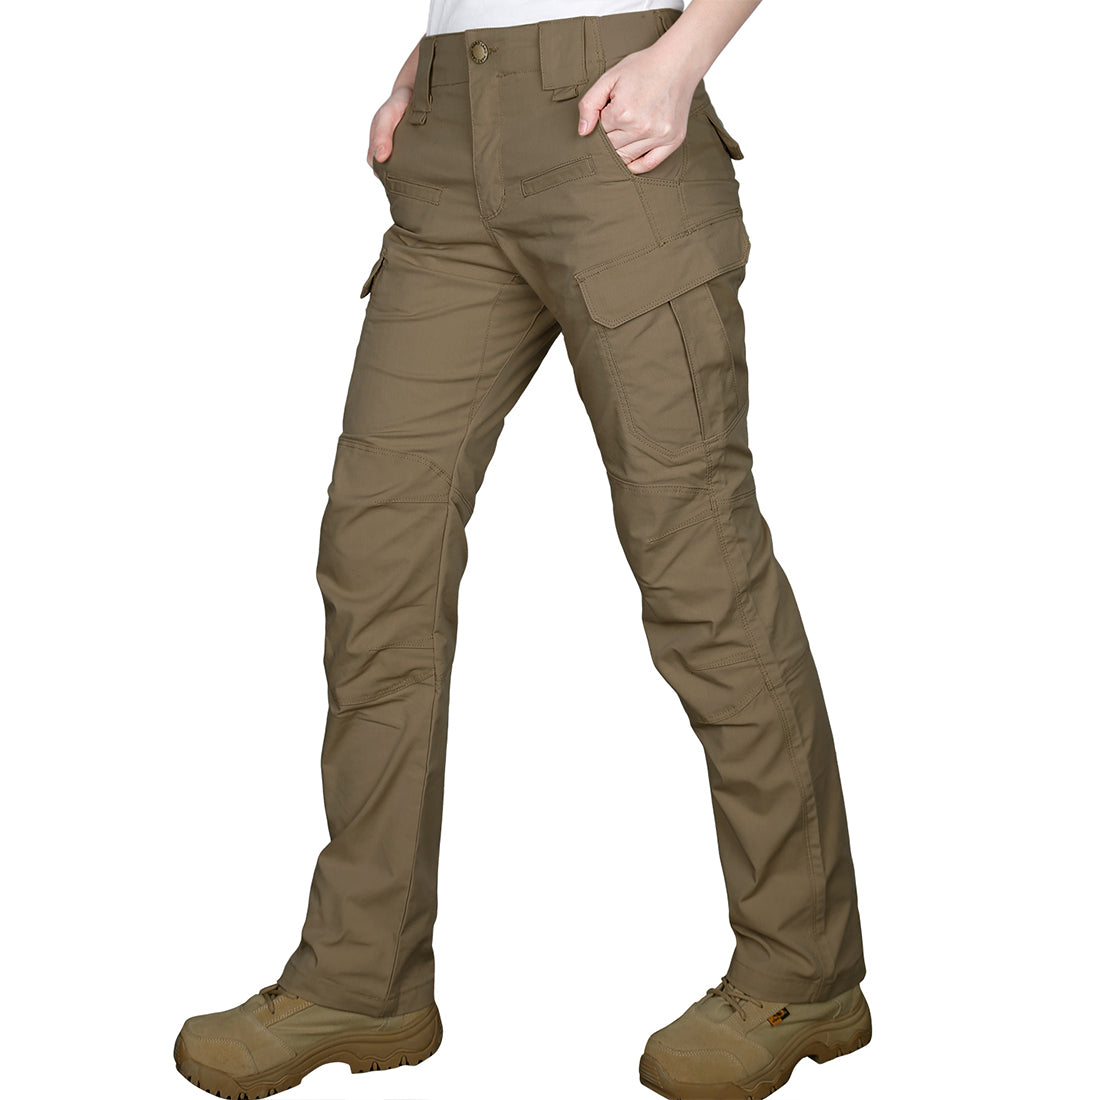 Women’s Tactical Pants | Women's Tactical Cargo Pants | Hardland ...